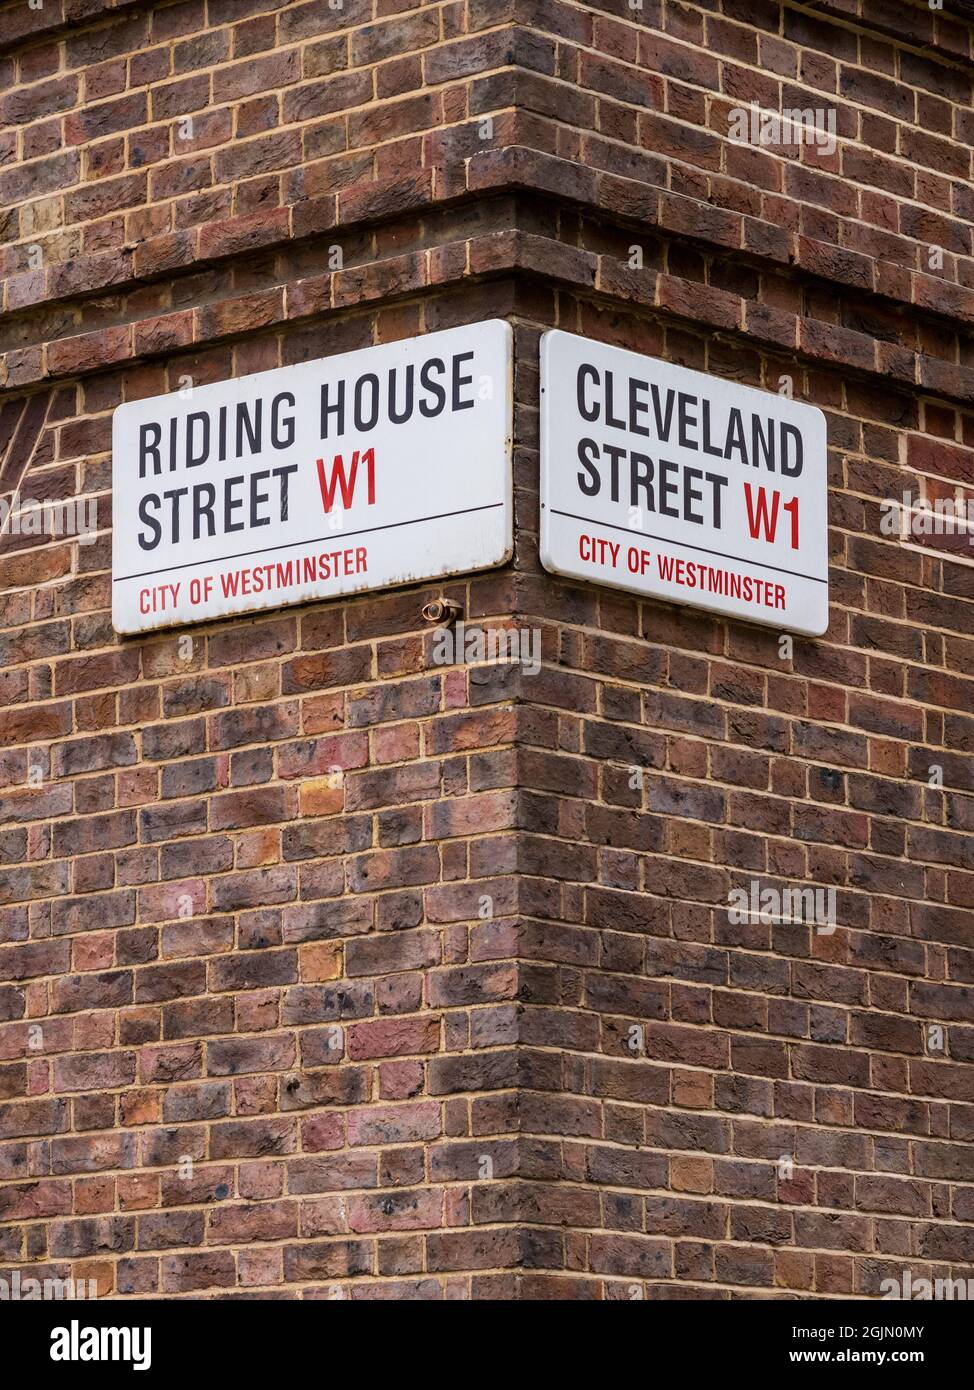 Indicazioni per Riding House Street W1 e Cleveland Street W1 in Fitzrovia London - Riding House St e Cleveland St London Street. Foto Stock